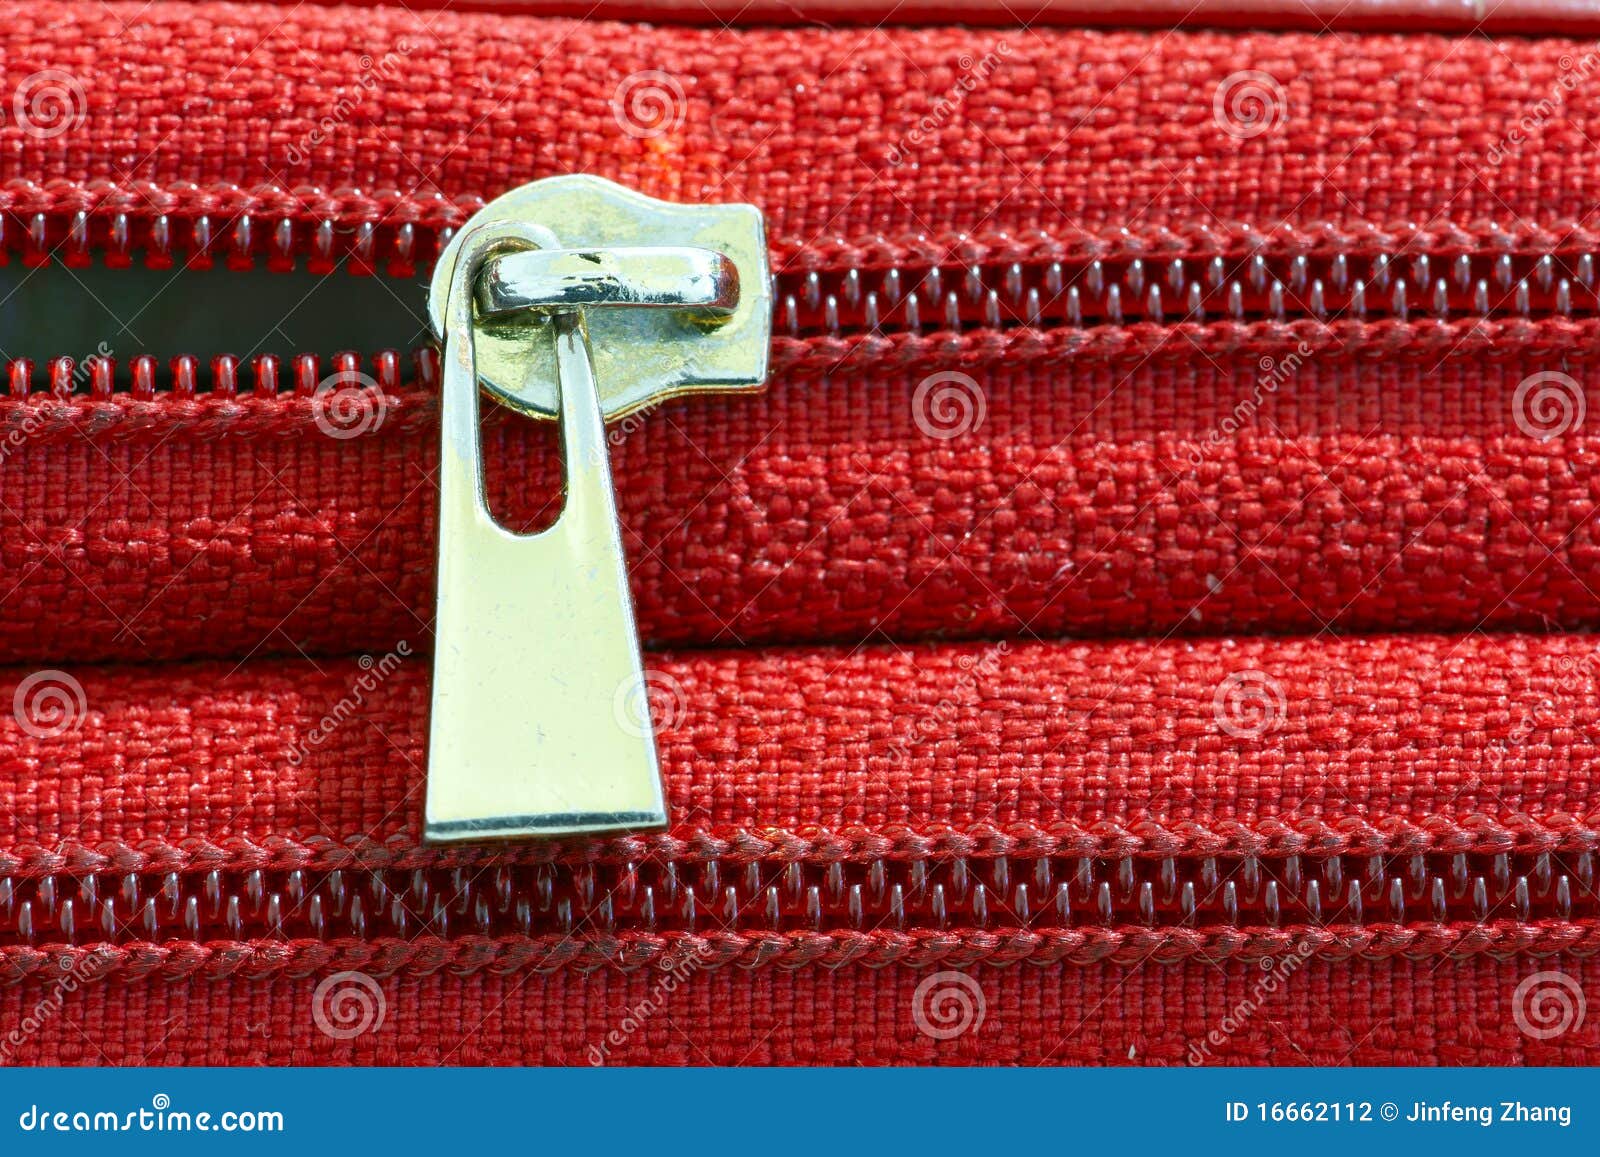 Slide fastener stock photo. Image of texture, seam, macro - 16662112